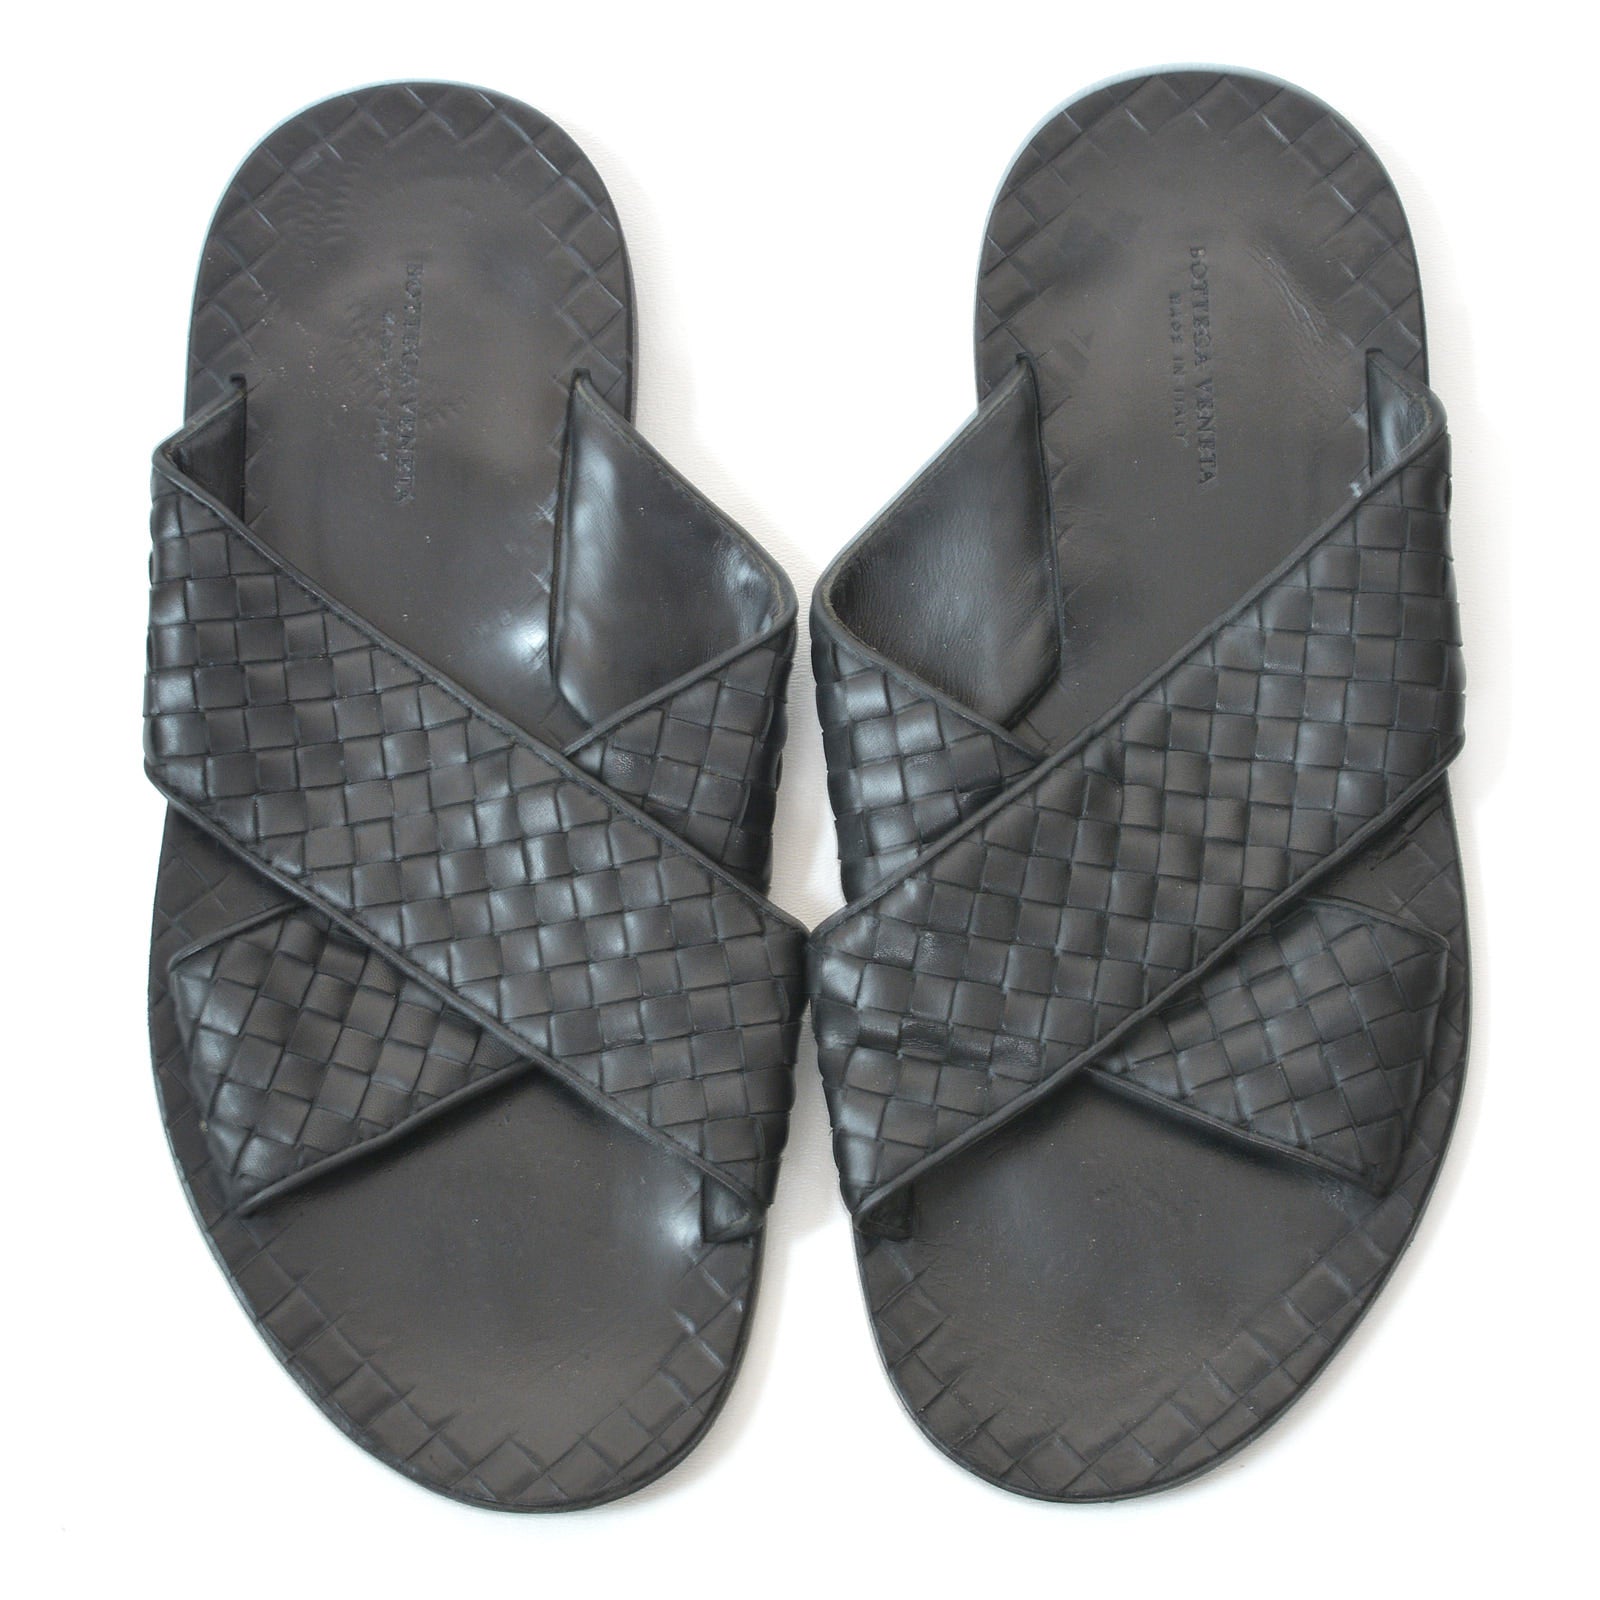 BOTTEGA VENETA Black Woven Calfskin Leather Slipper Sandal Shoes Size? BOTTEGA VENETA